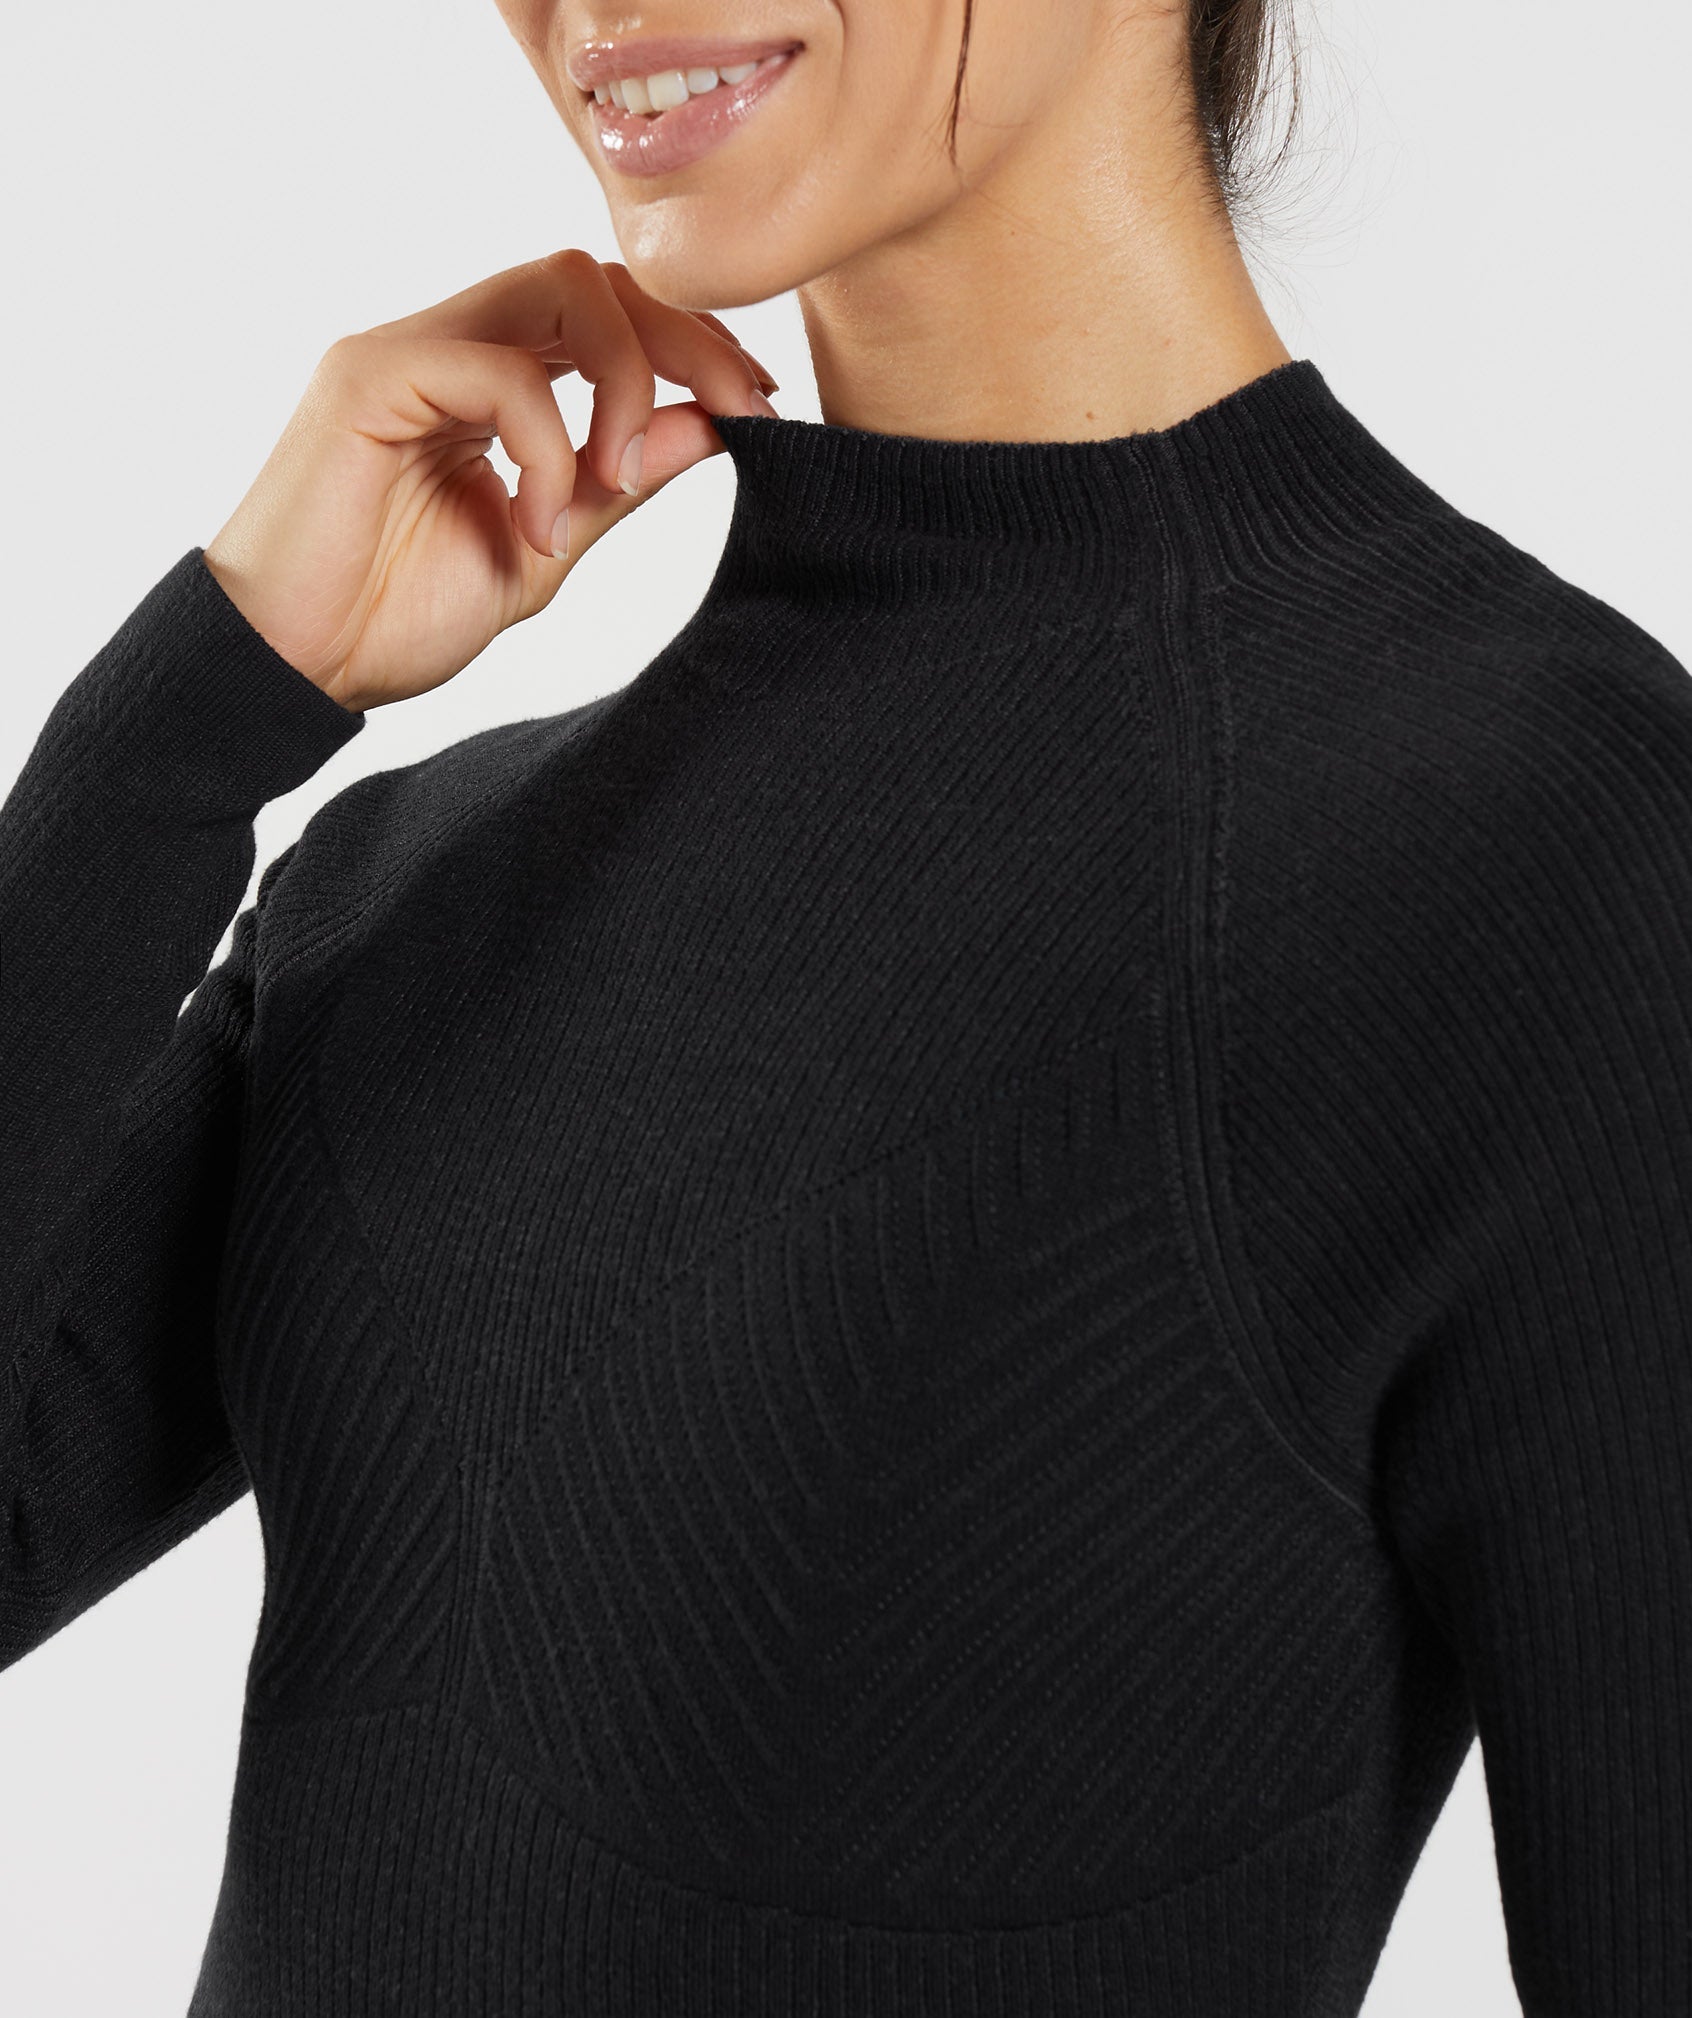 Pause Knitwear Long Sleeve Top in Black/Onyx Grey